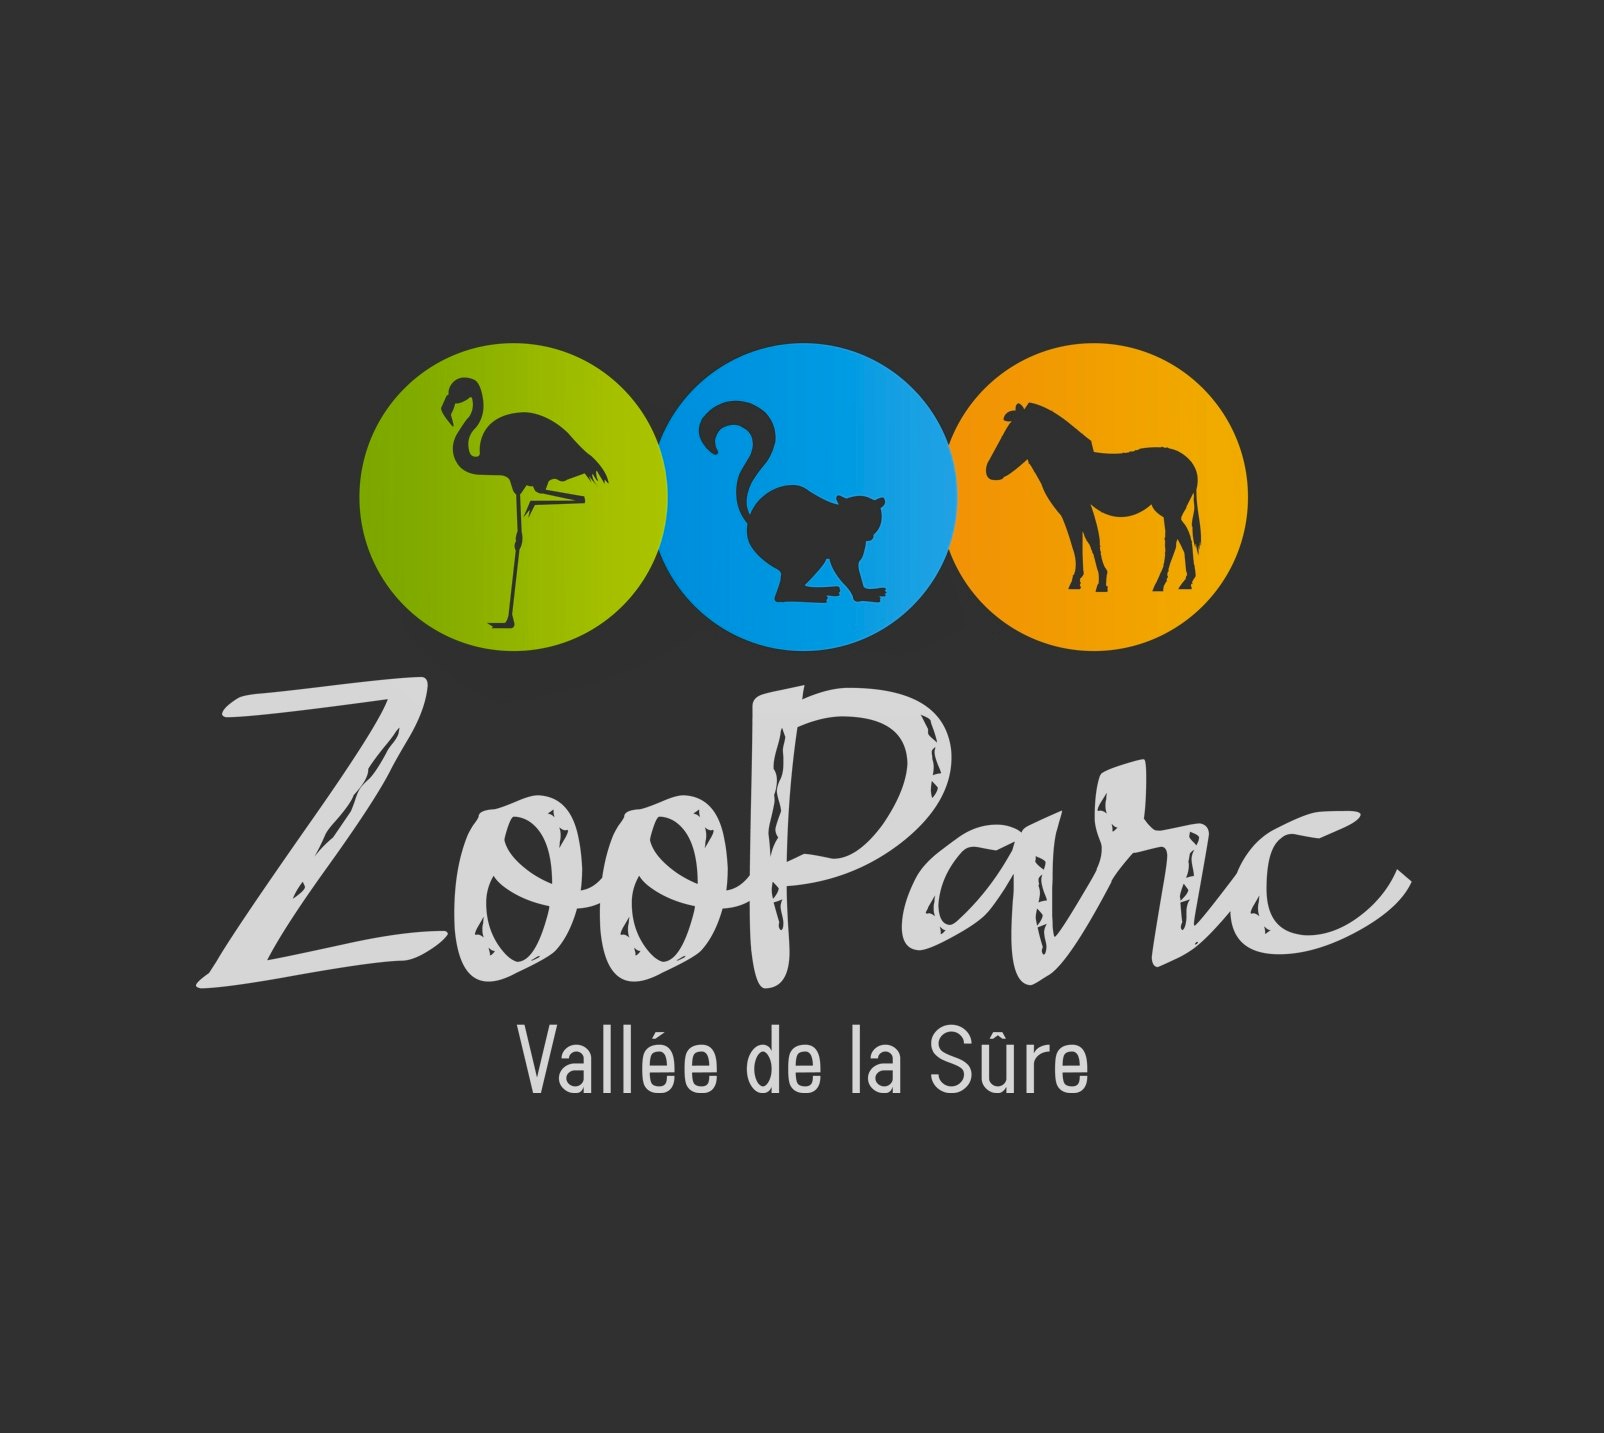 Ticket voor ZooParc Vallée de la Sûre in België!